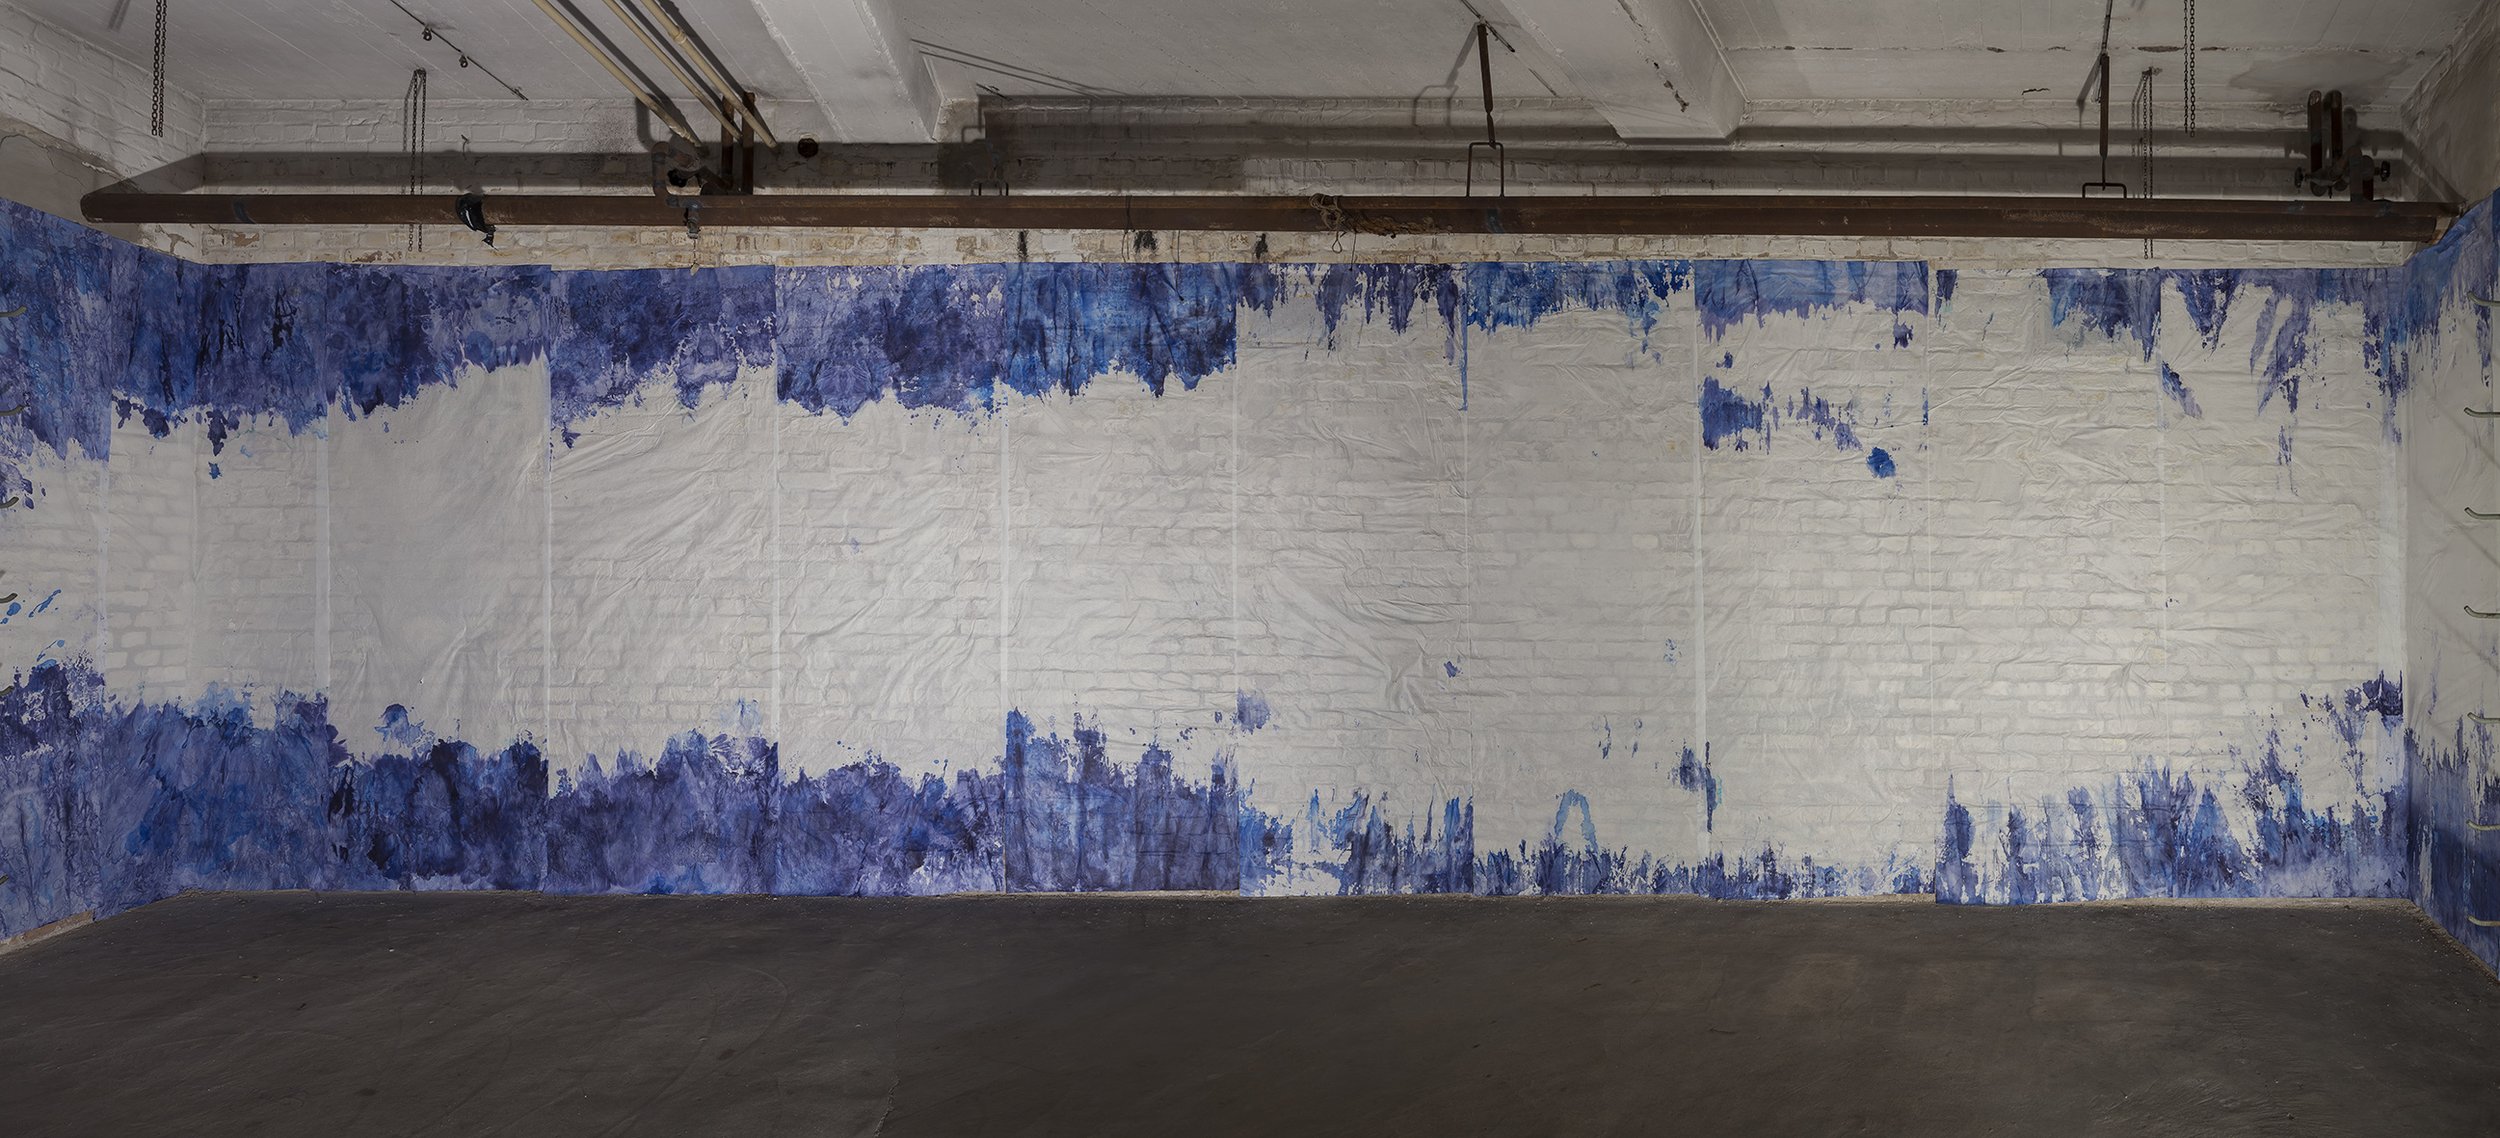  Raumfahrt, painting installation, 2018, 2,5 m x 30 m, ink on Xuan paper glued on walls. 